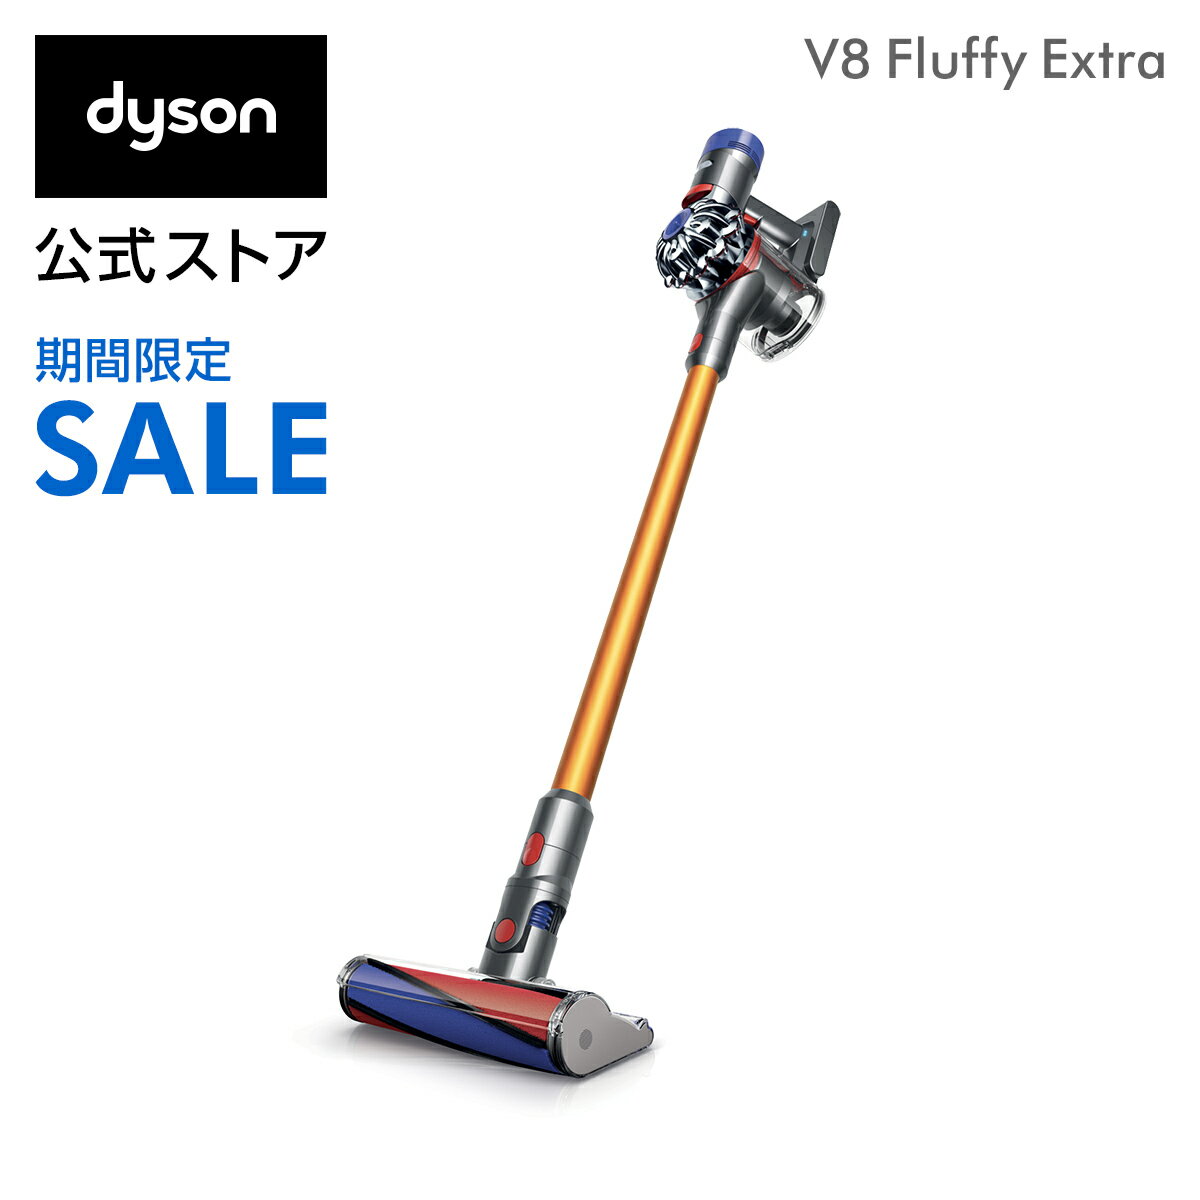 30%OFF【期間限定】5/2(土)16:59まで！ダイソン Dyson V8 Fluffy Extra サイクロン式 コードレス掃除機 dyson SV10FF EXT